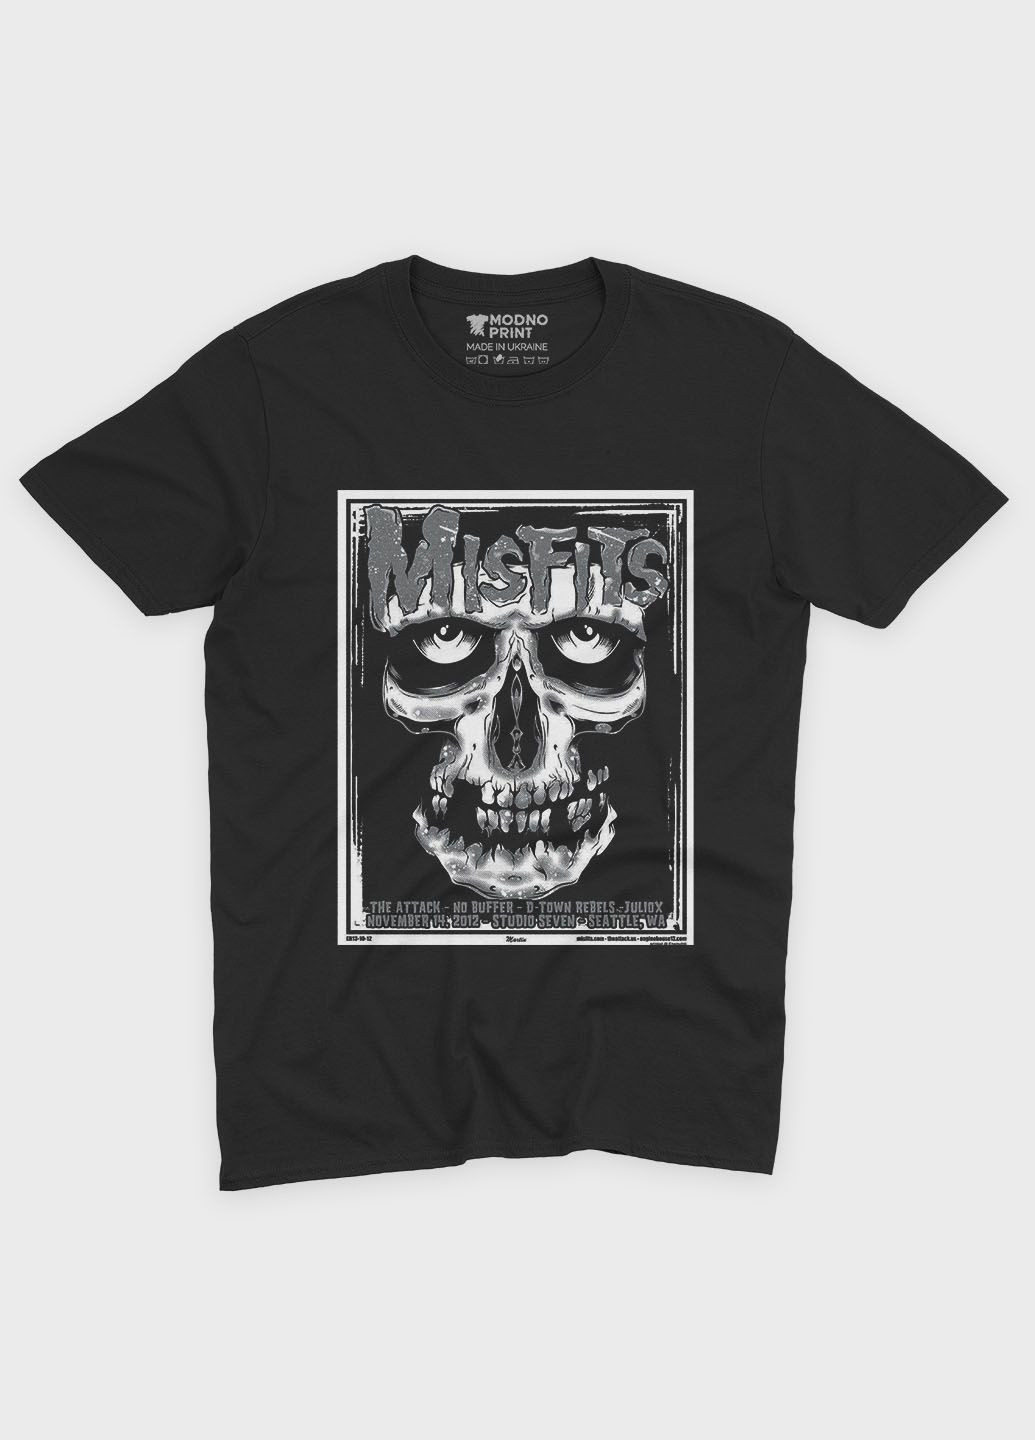 Черная летняя мужская футболка с рок принтом "misfits" (ts001-4-bl-004-2-252-f) Modno